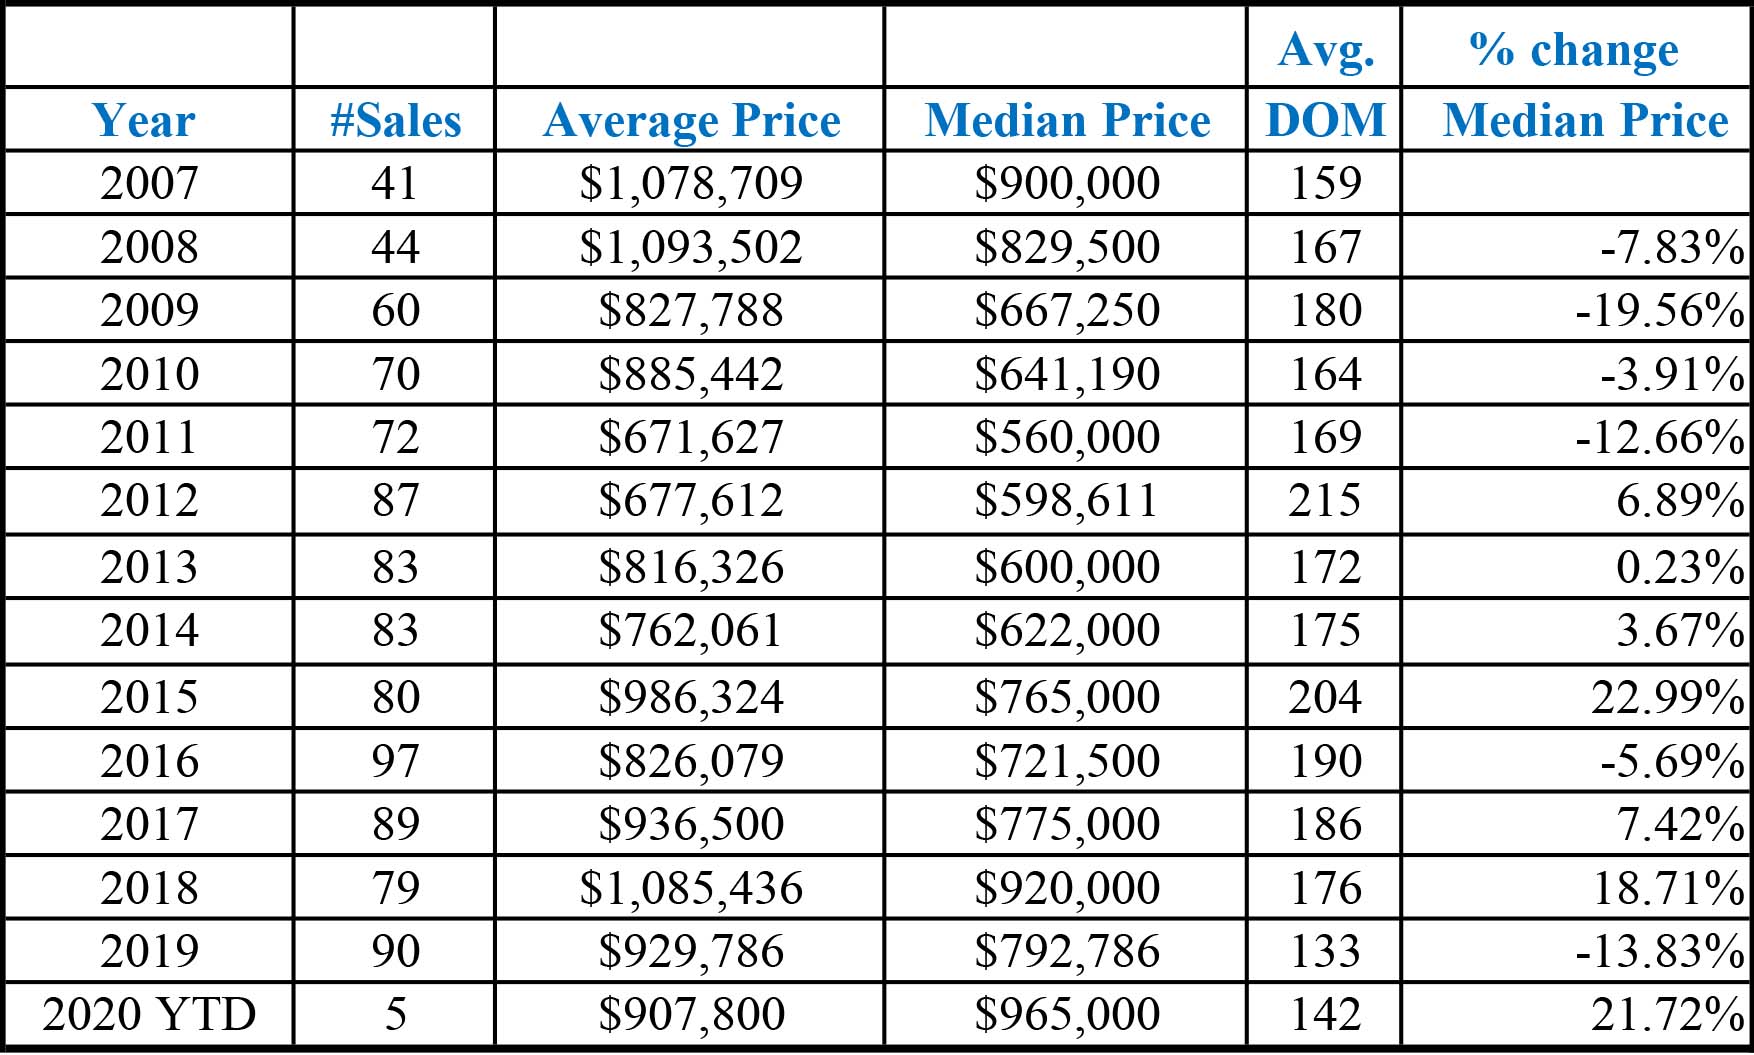 Median Price Table